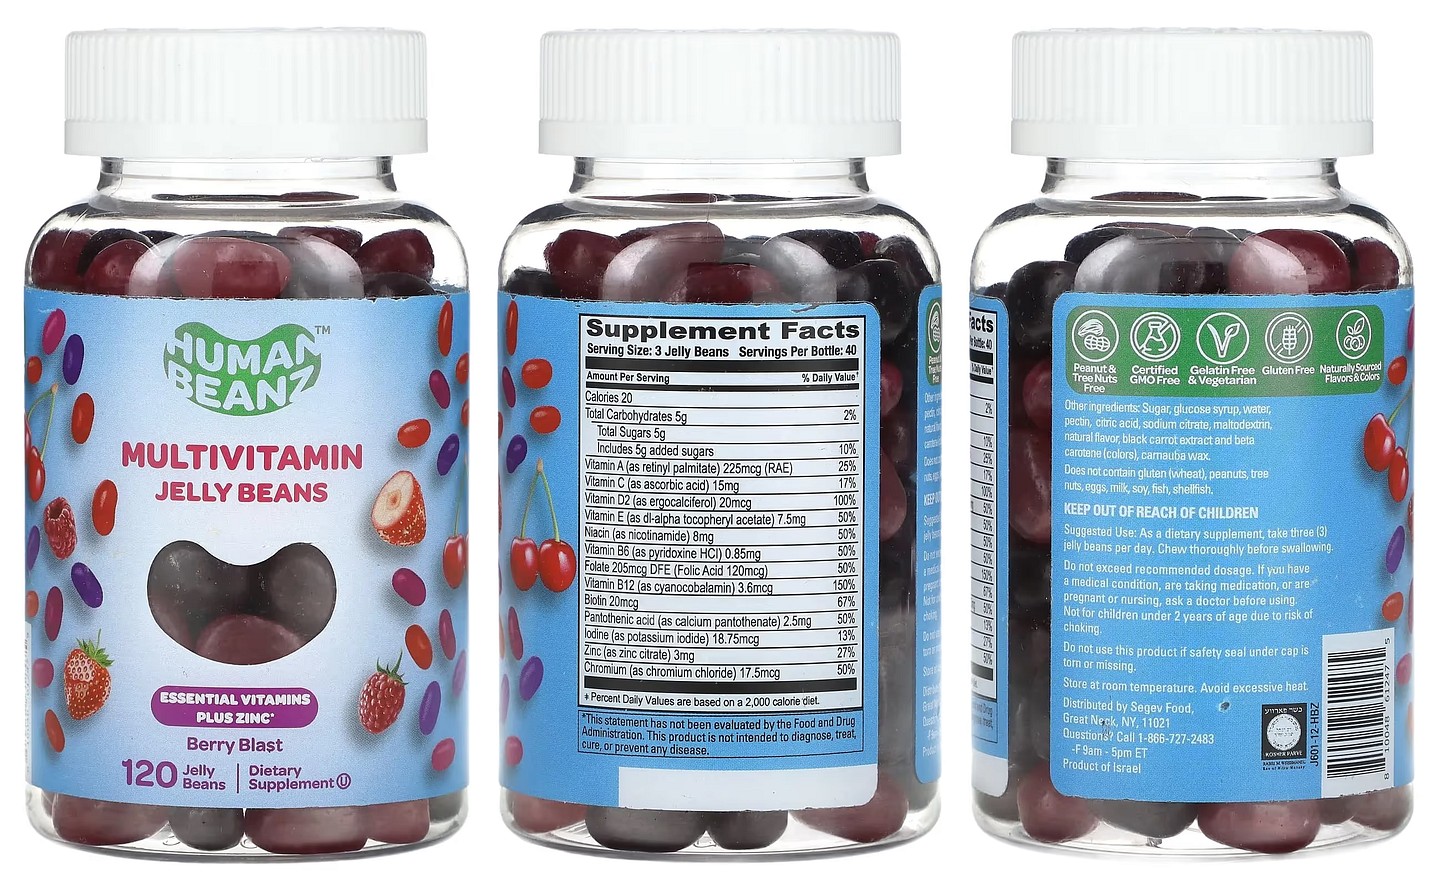 Human Beanz, Multivitamin Jelly Beans, Berry Blast packaging